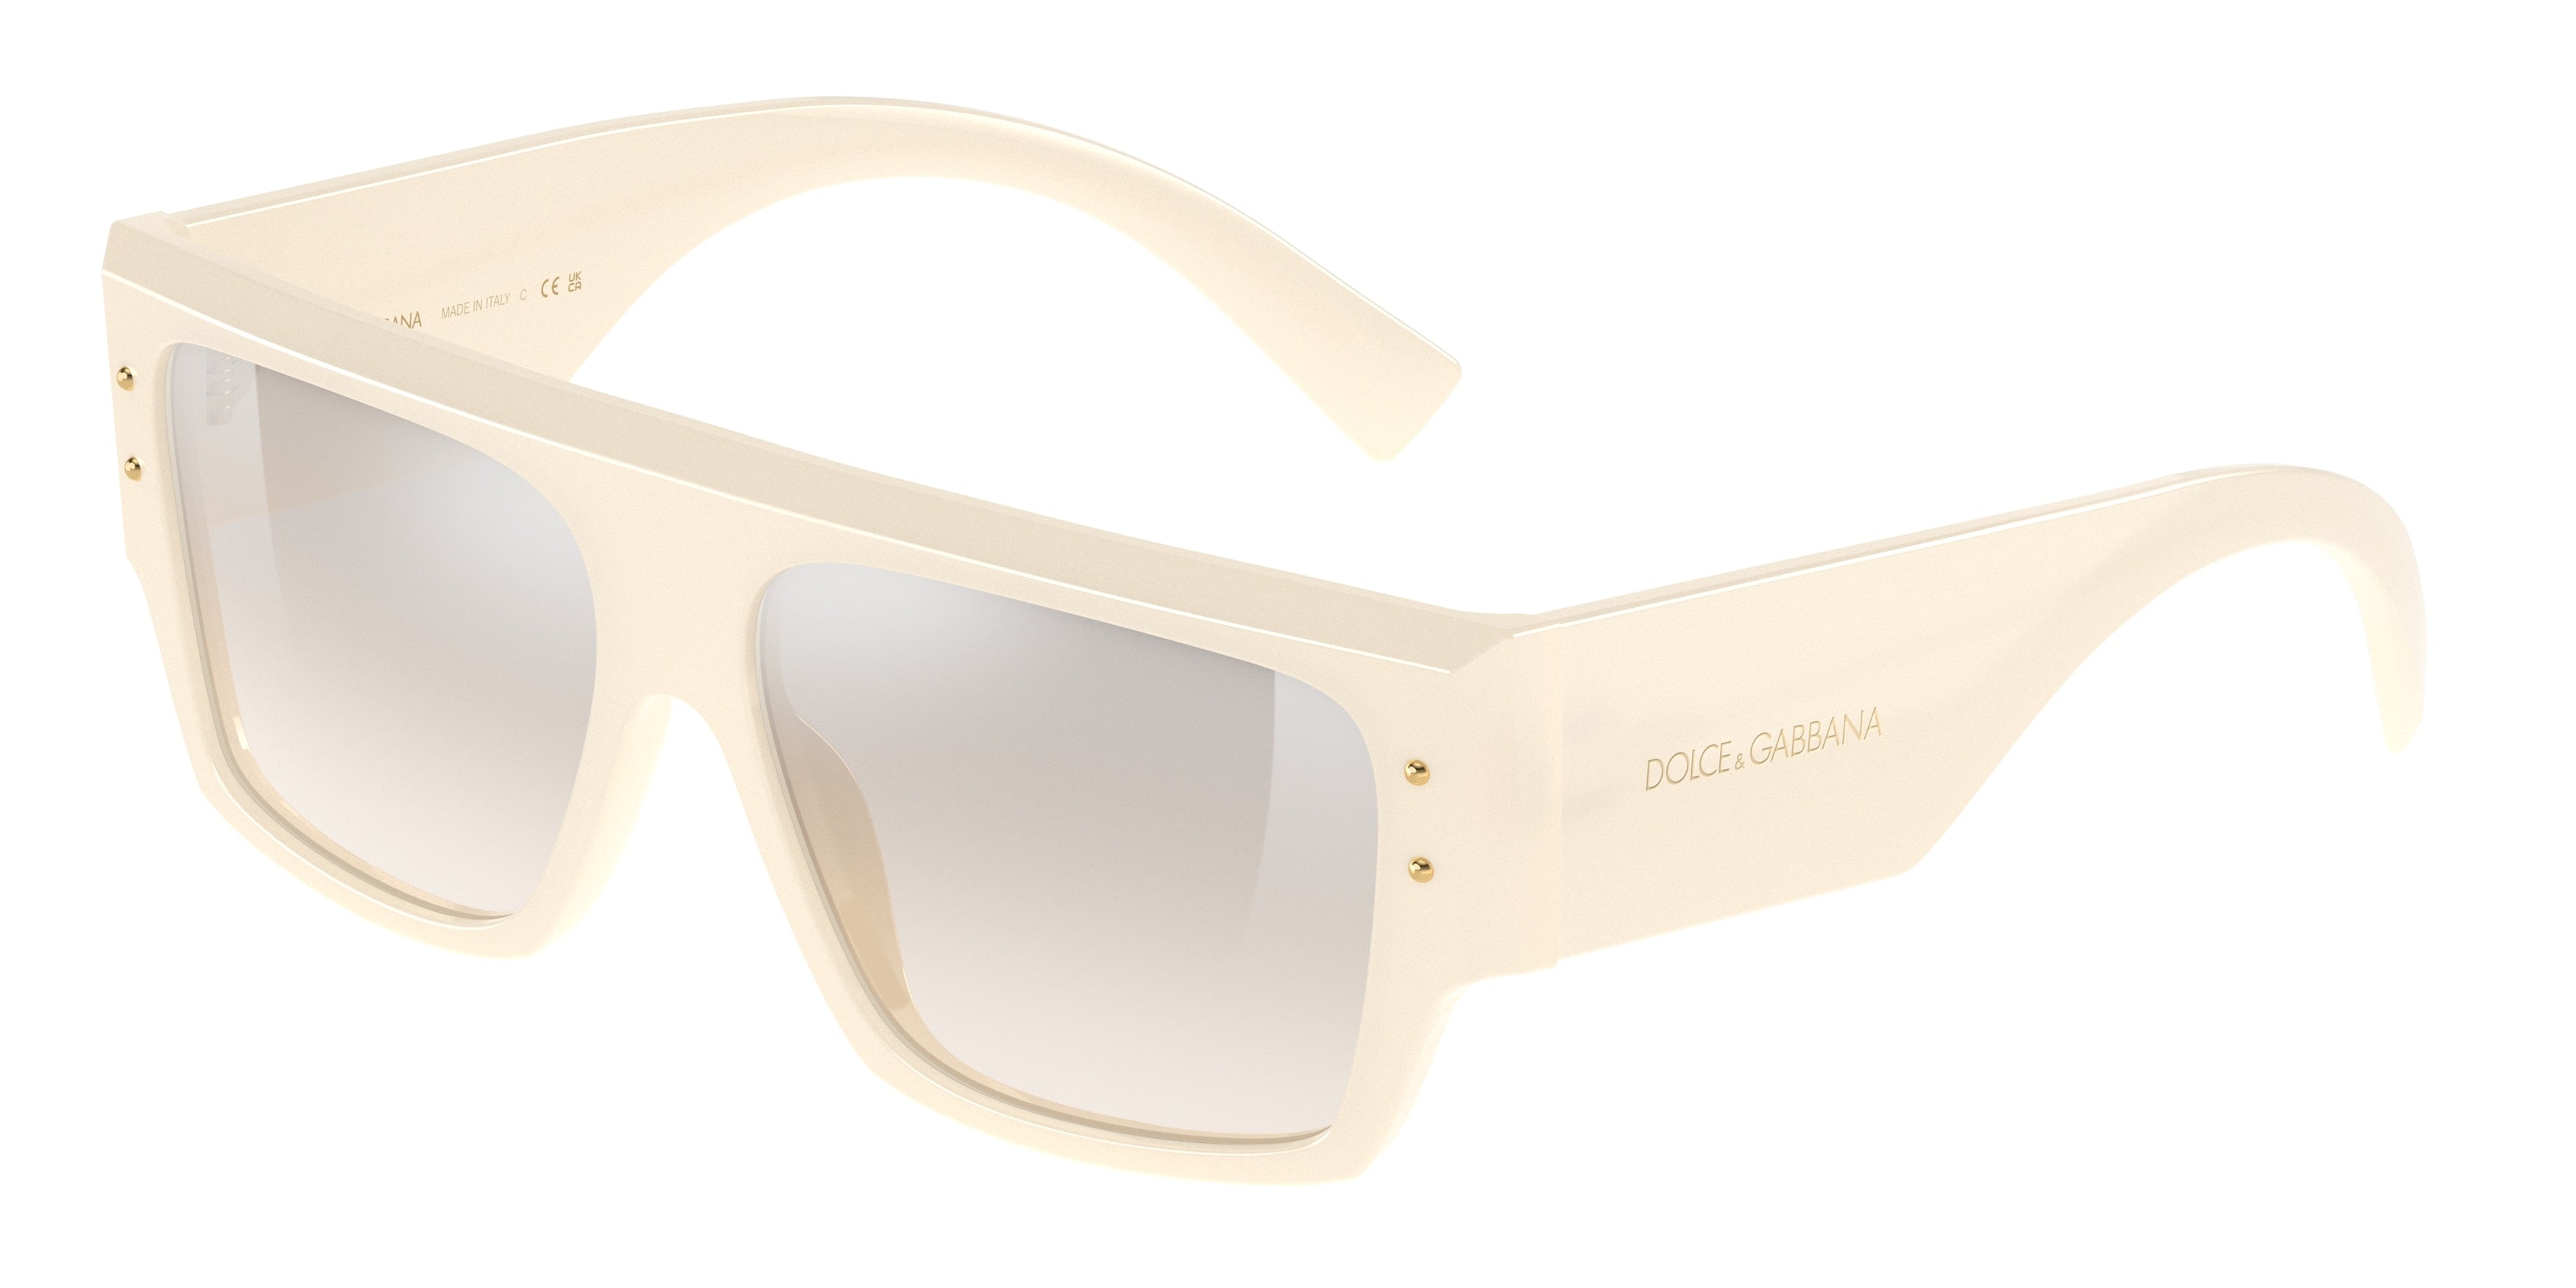 DOLCE & GABBANA DG4459 Square Sunglasses  3427J6-Ivory 56-145-14 - Color Map White